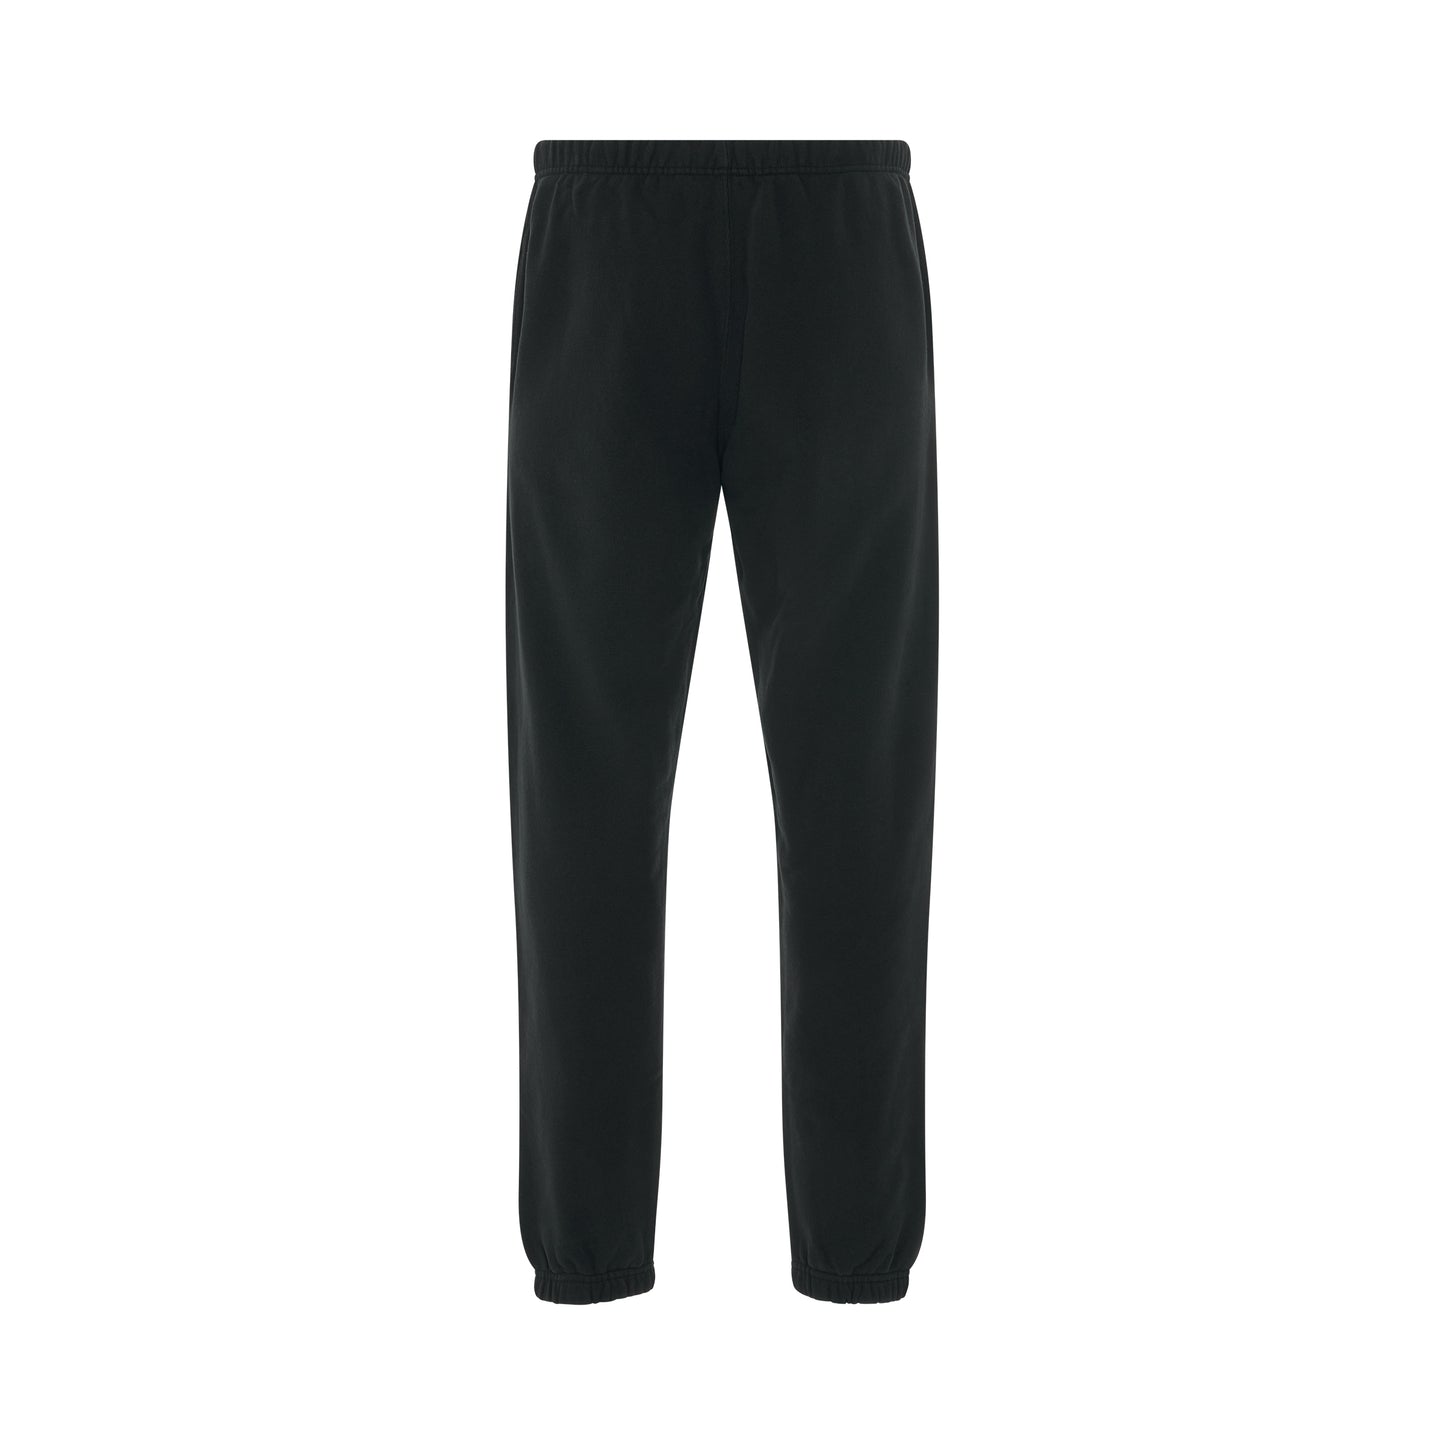 CTNMB Vertical Sweatpants in Black